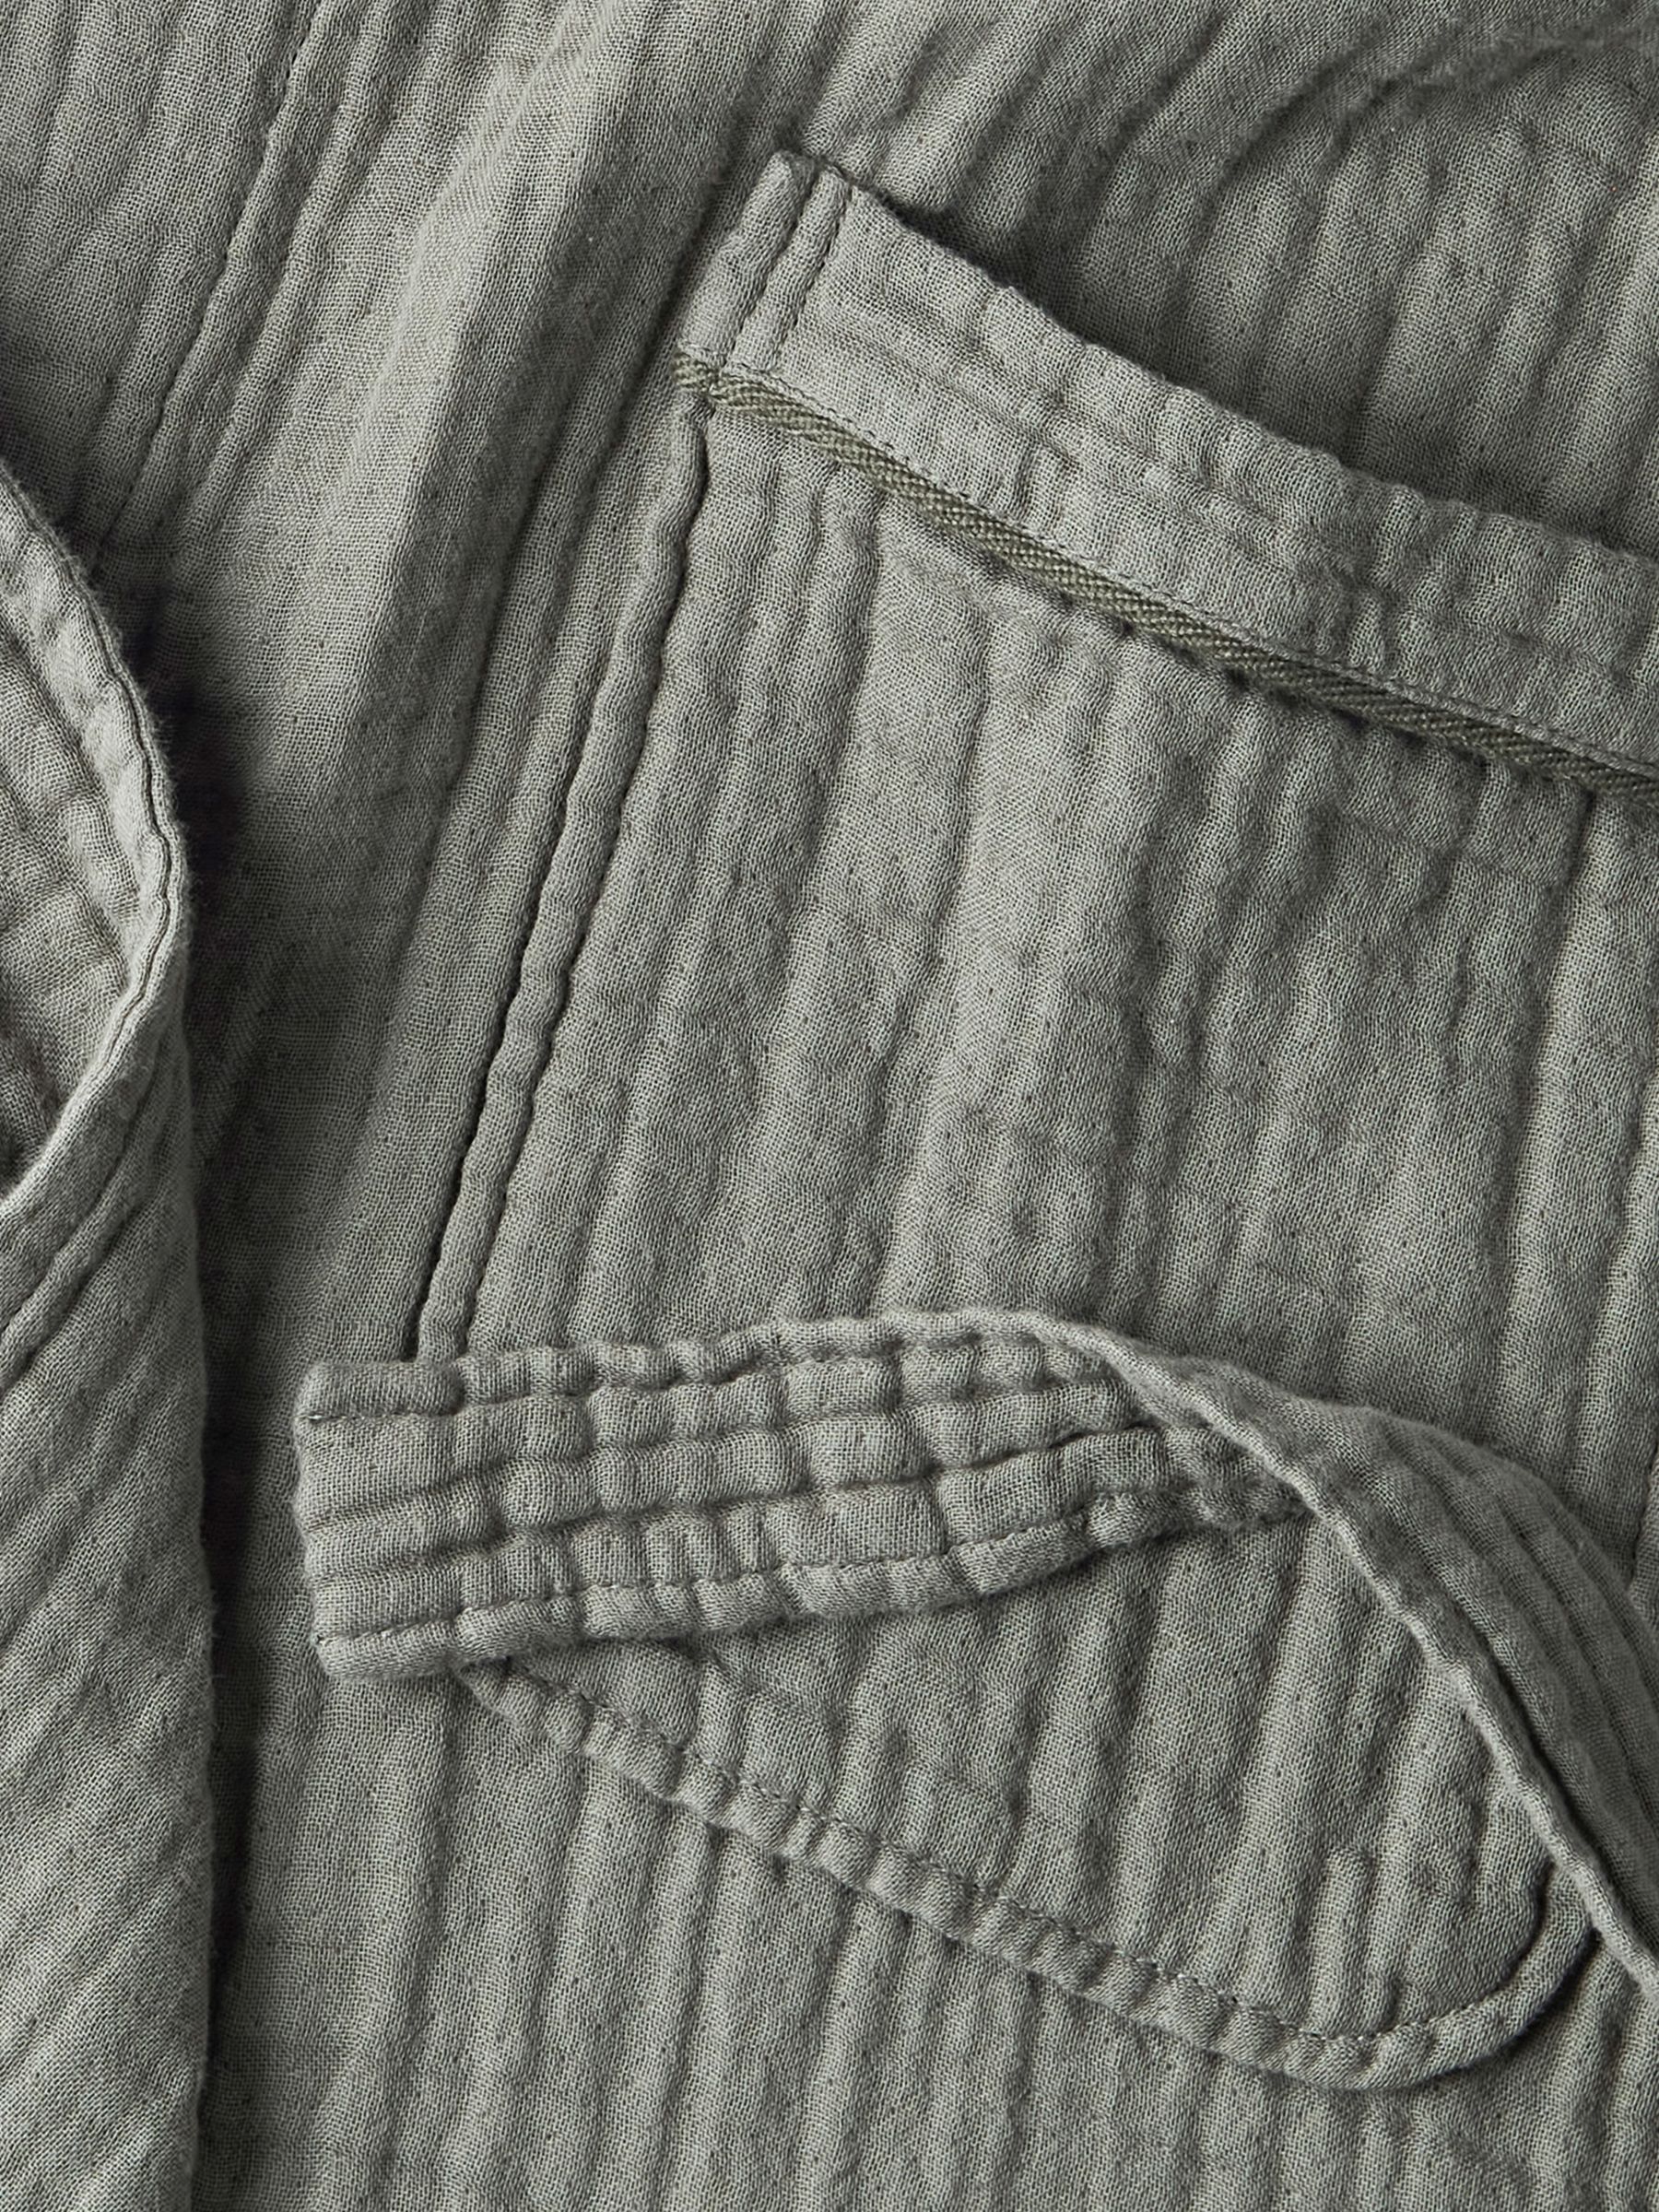 Bedfolk Dream Cotton Robe, Moss, XS